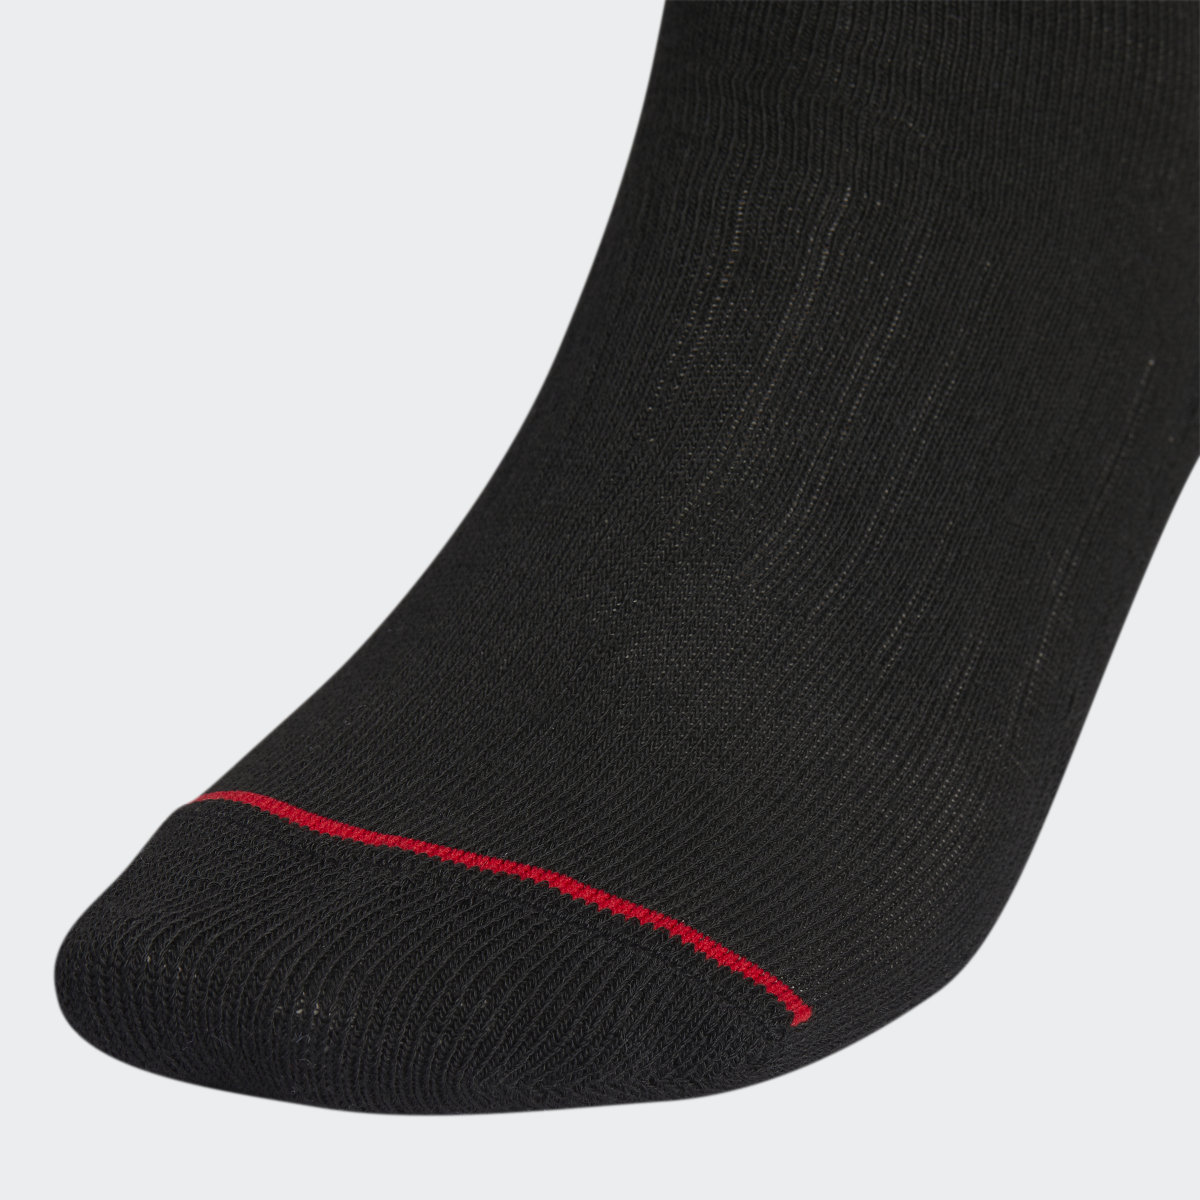 Adidas Classic Cushioned Crew Socks 3 Pairs. 4